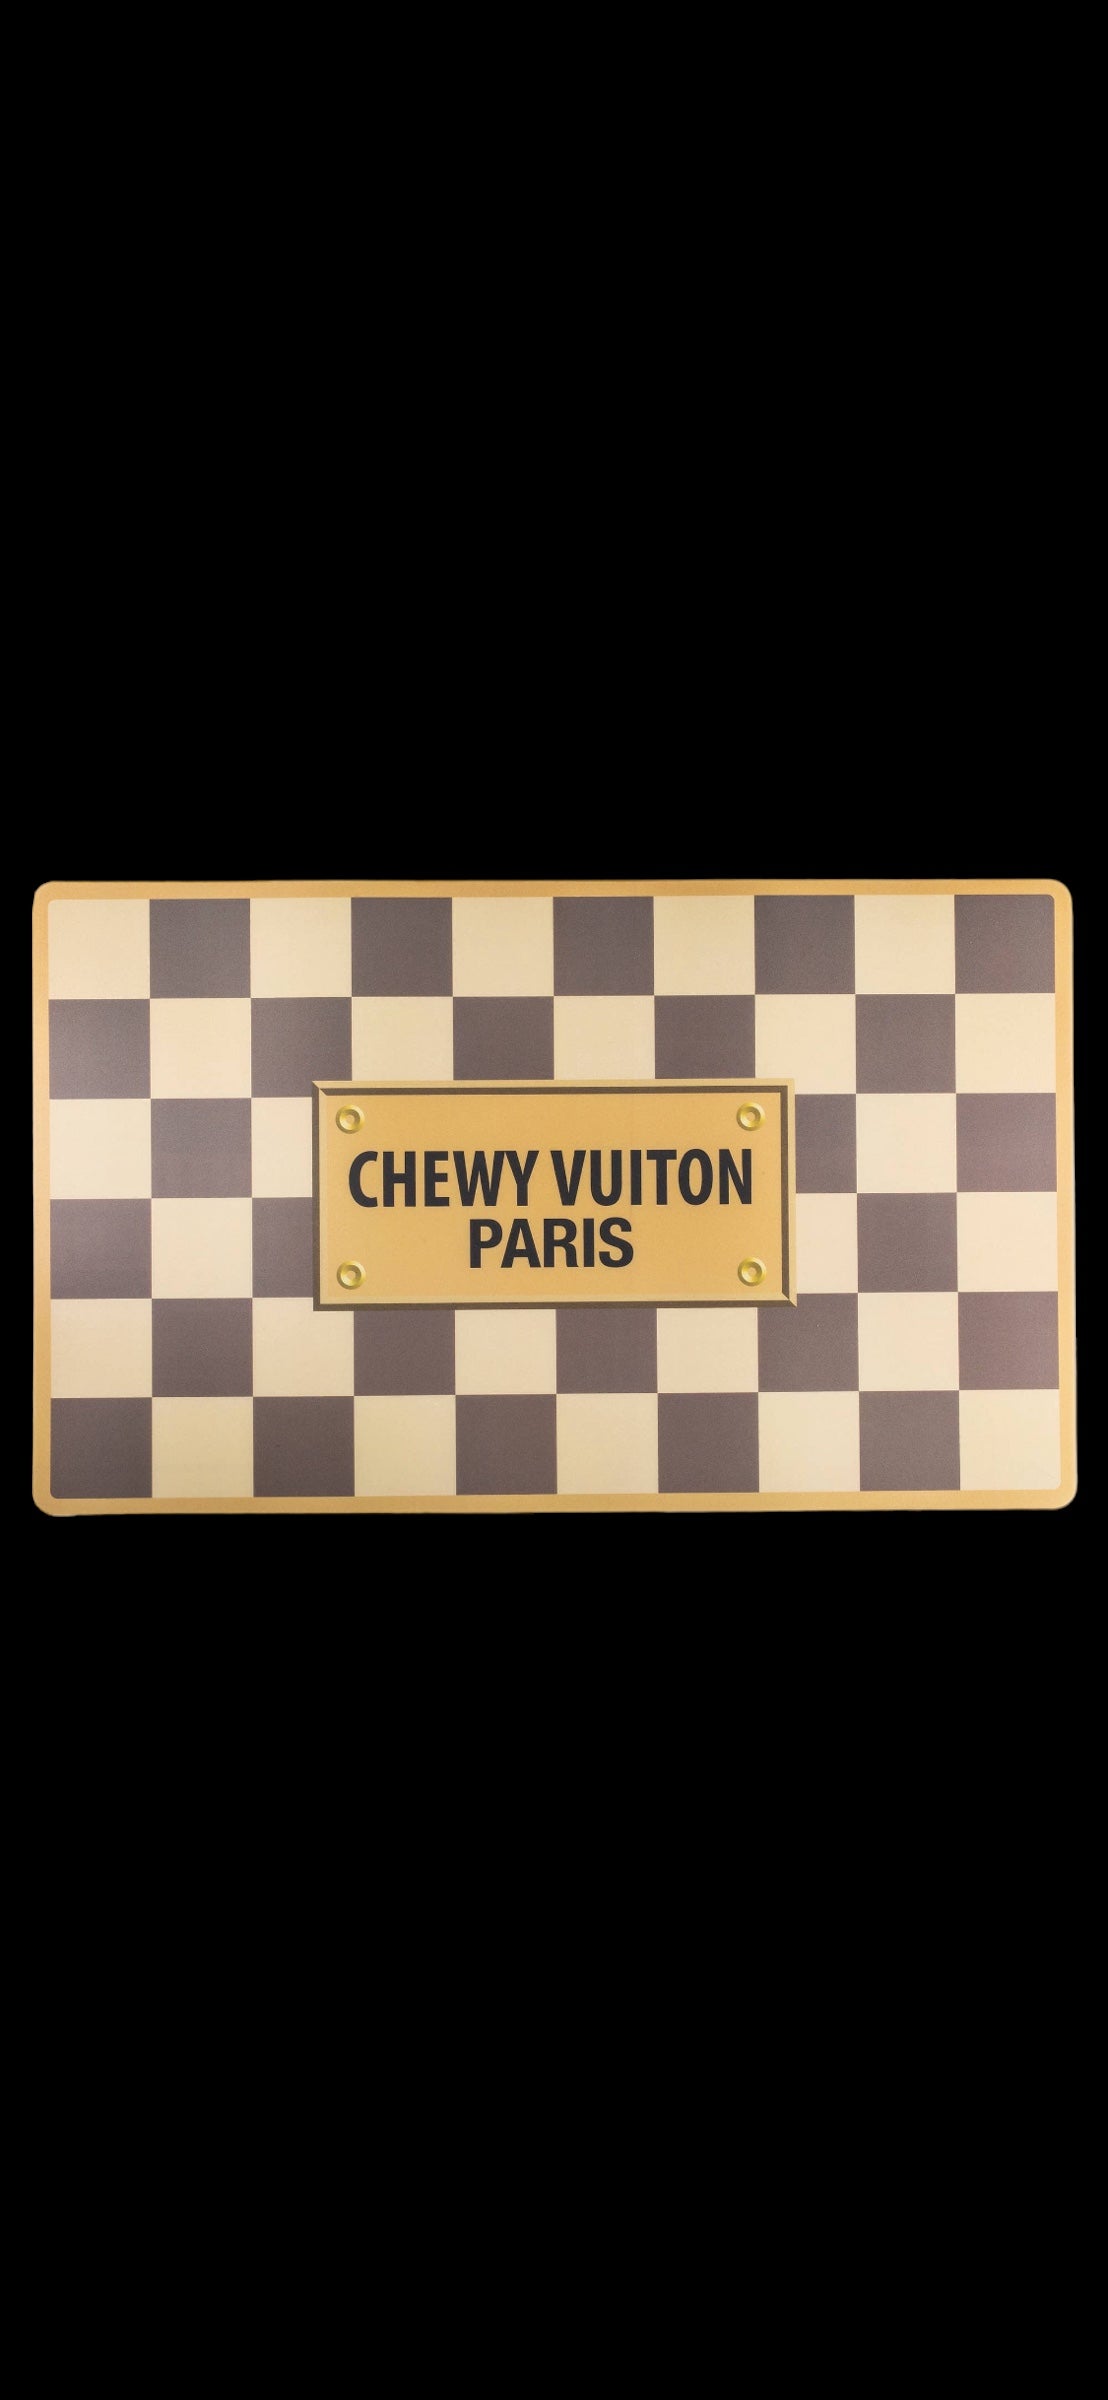 Chewy Vuiton Paris Set